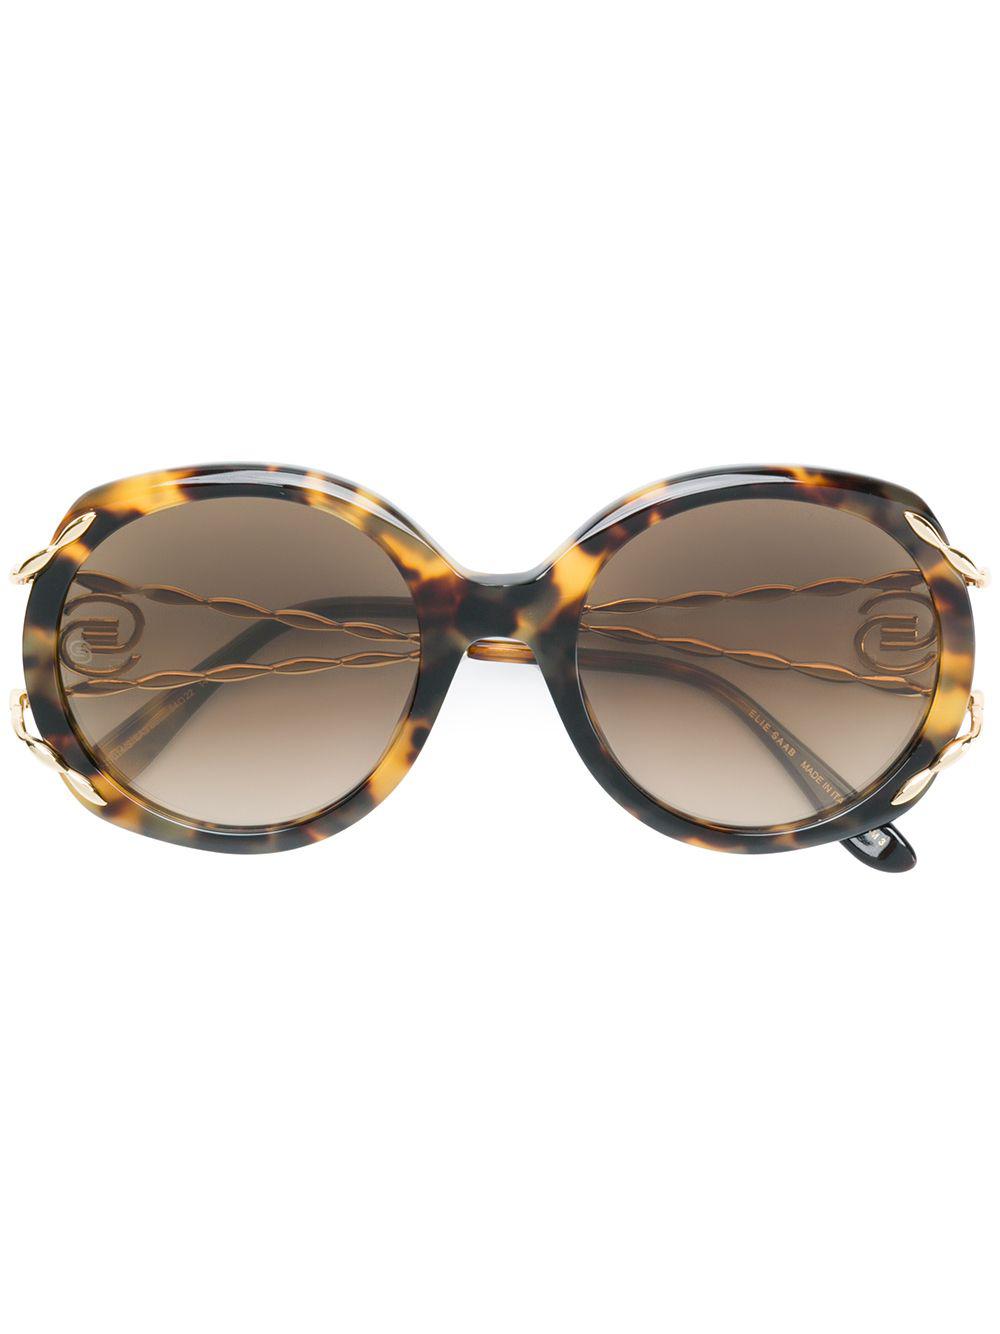 Elie Saab Tortoiseshell Oversized Logo Sunglasses in Brown - Lyst